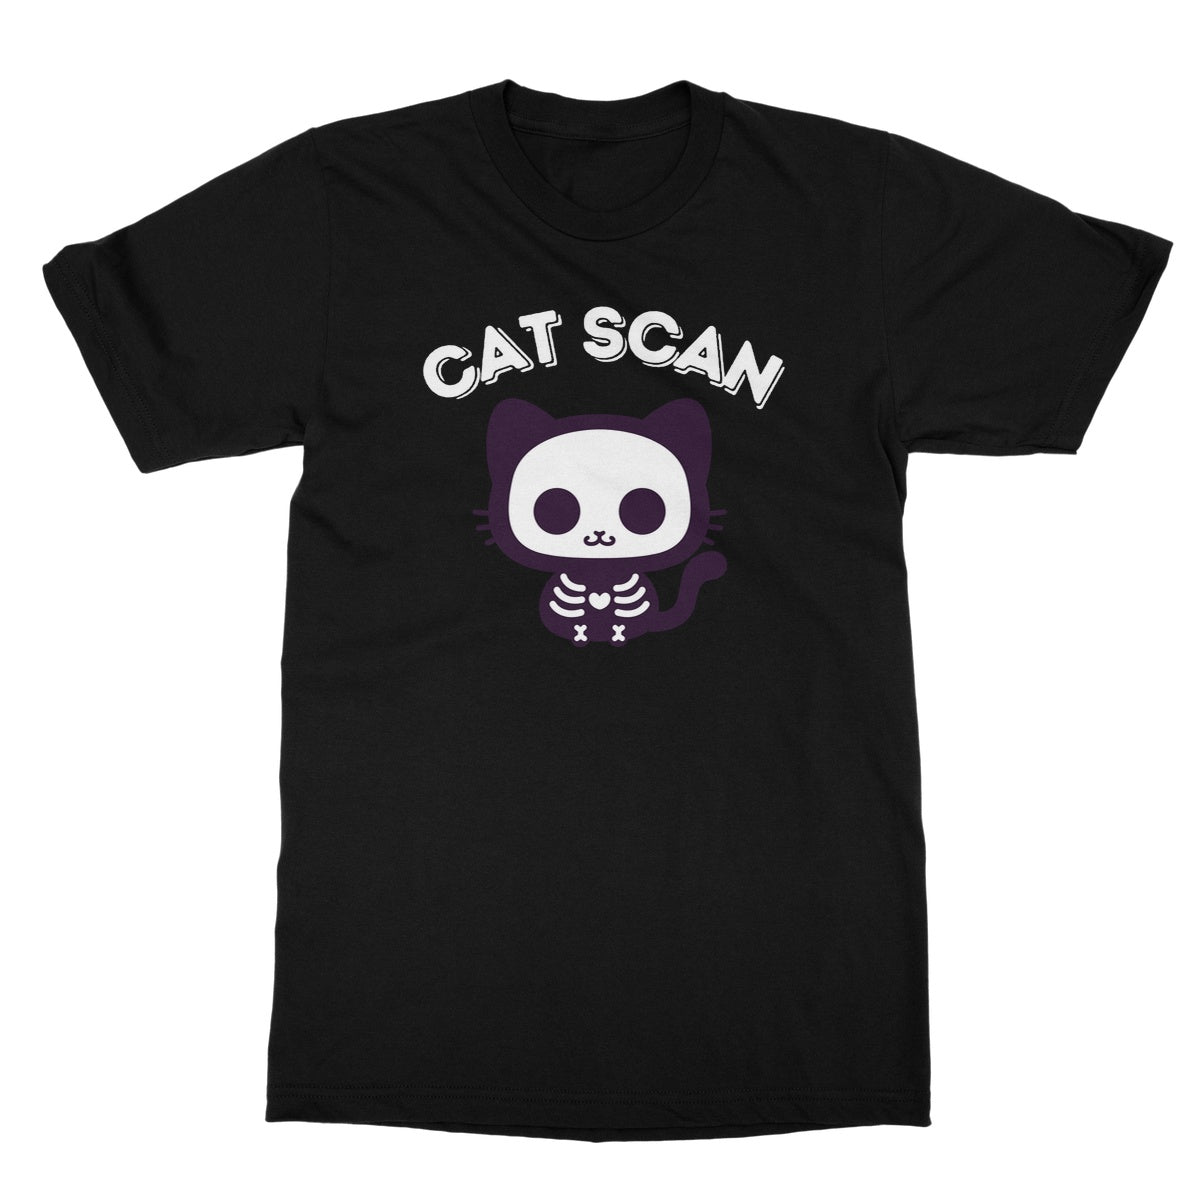 cat scan t shirt black